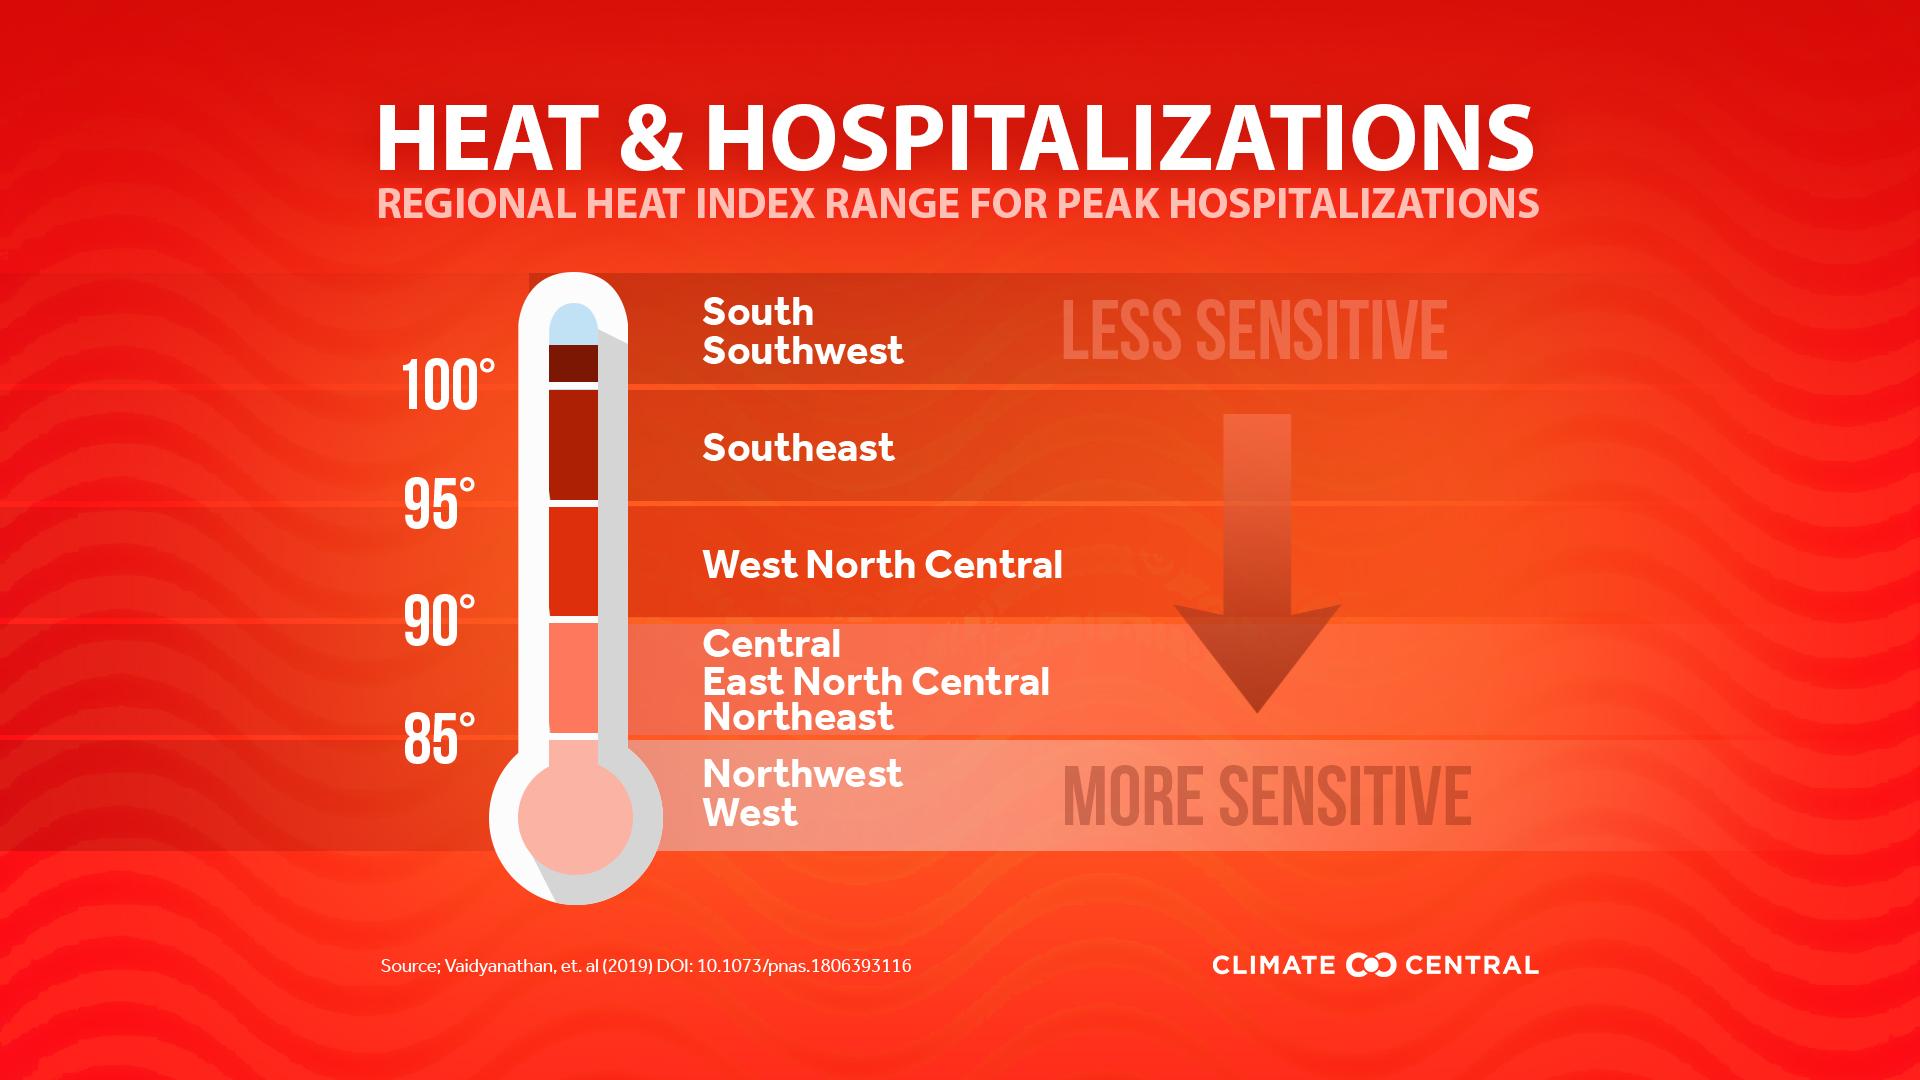 Heat & Hospitalizations Infographic - Heat and Hospitalizations